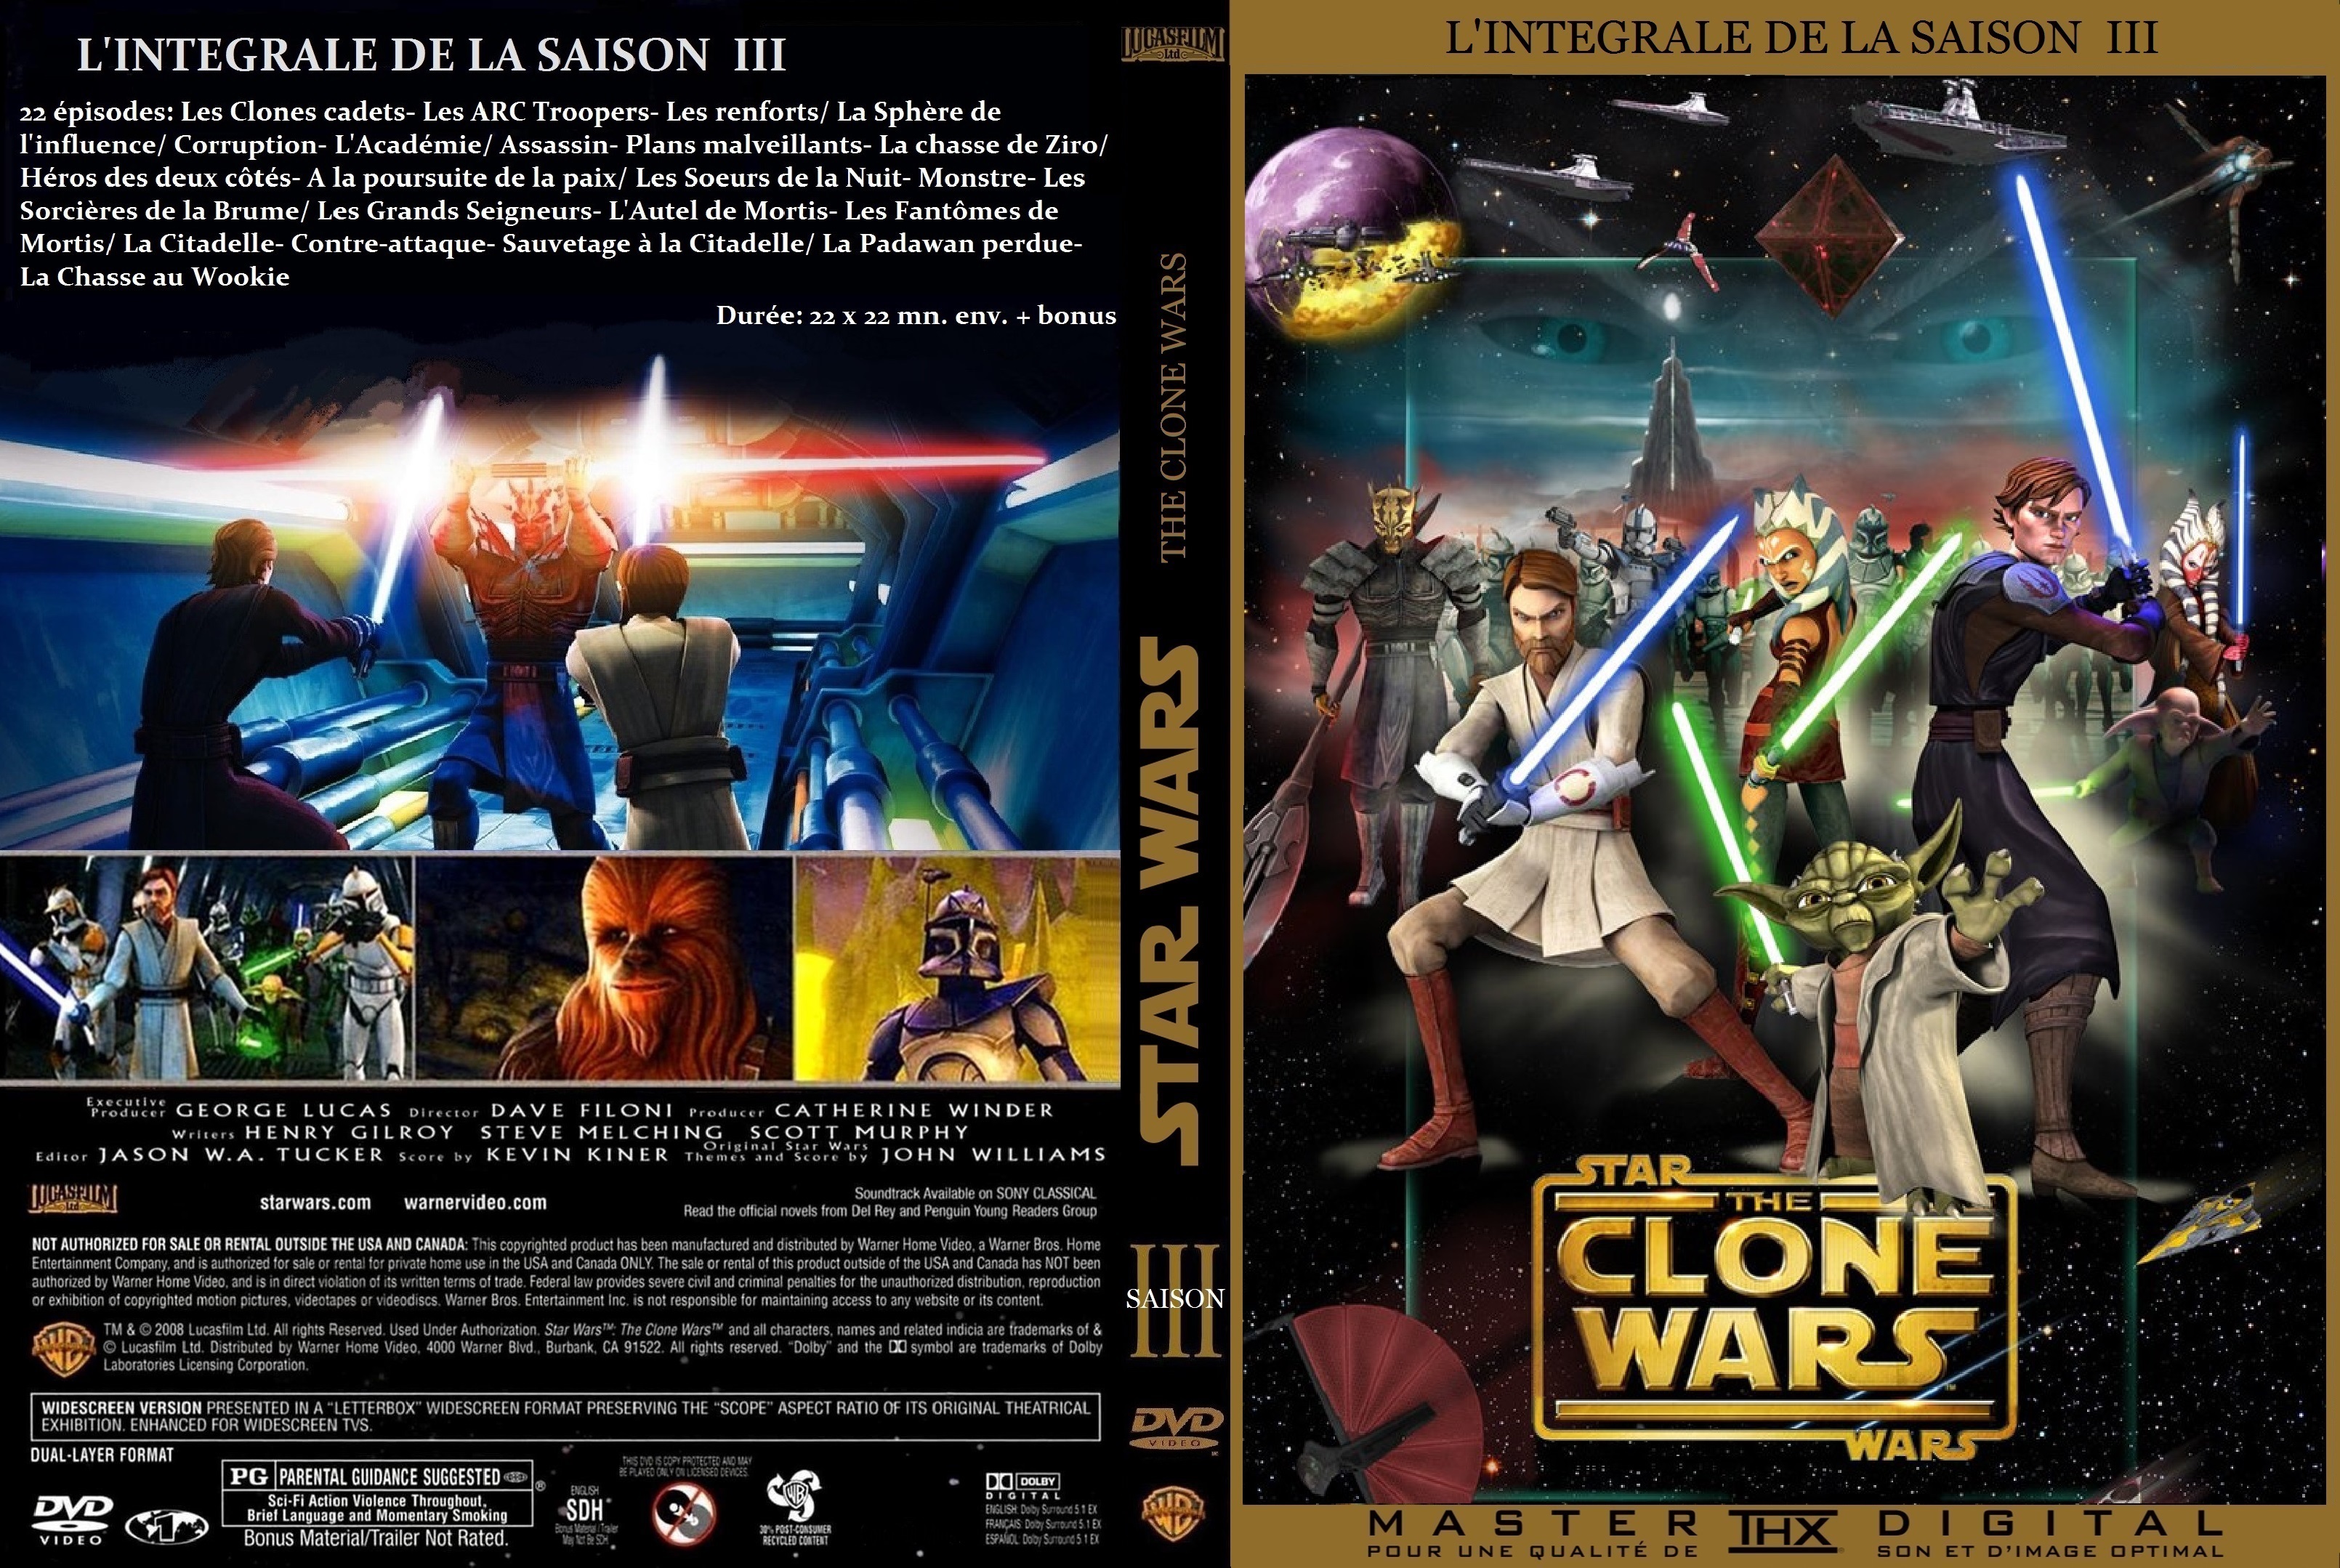 Jaquette DVD Star Wars The Clone Wars Saison 3 custom